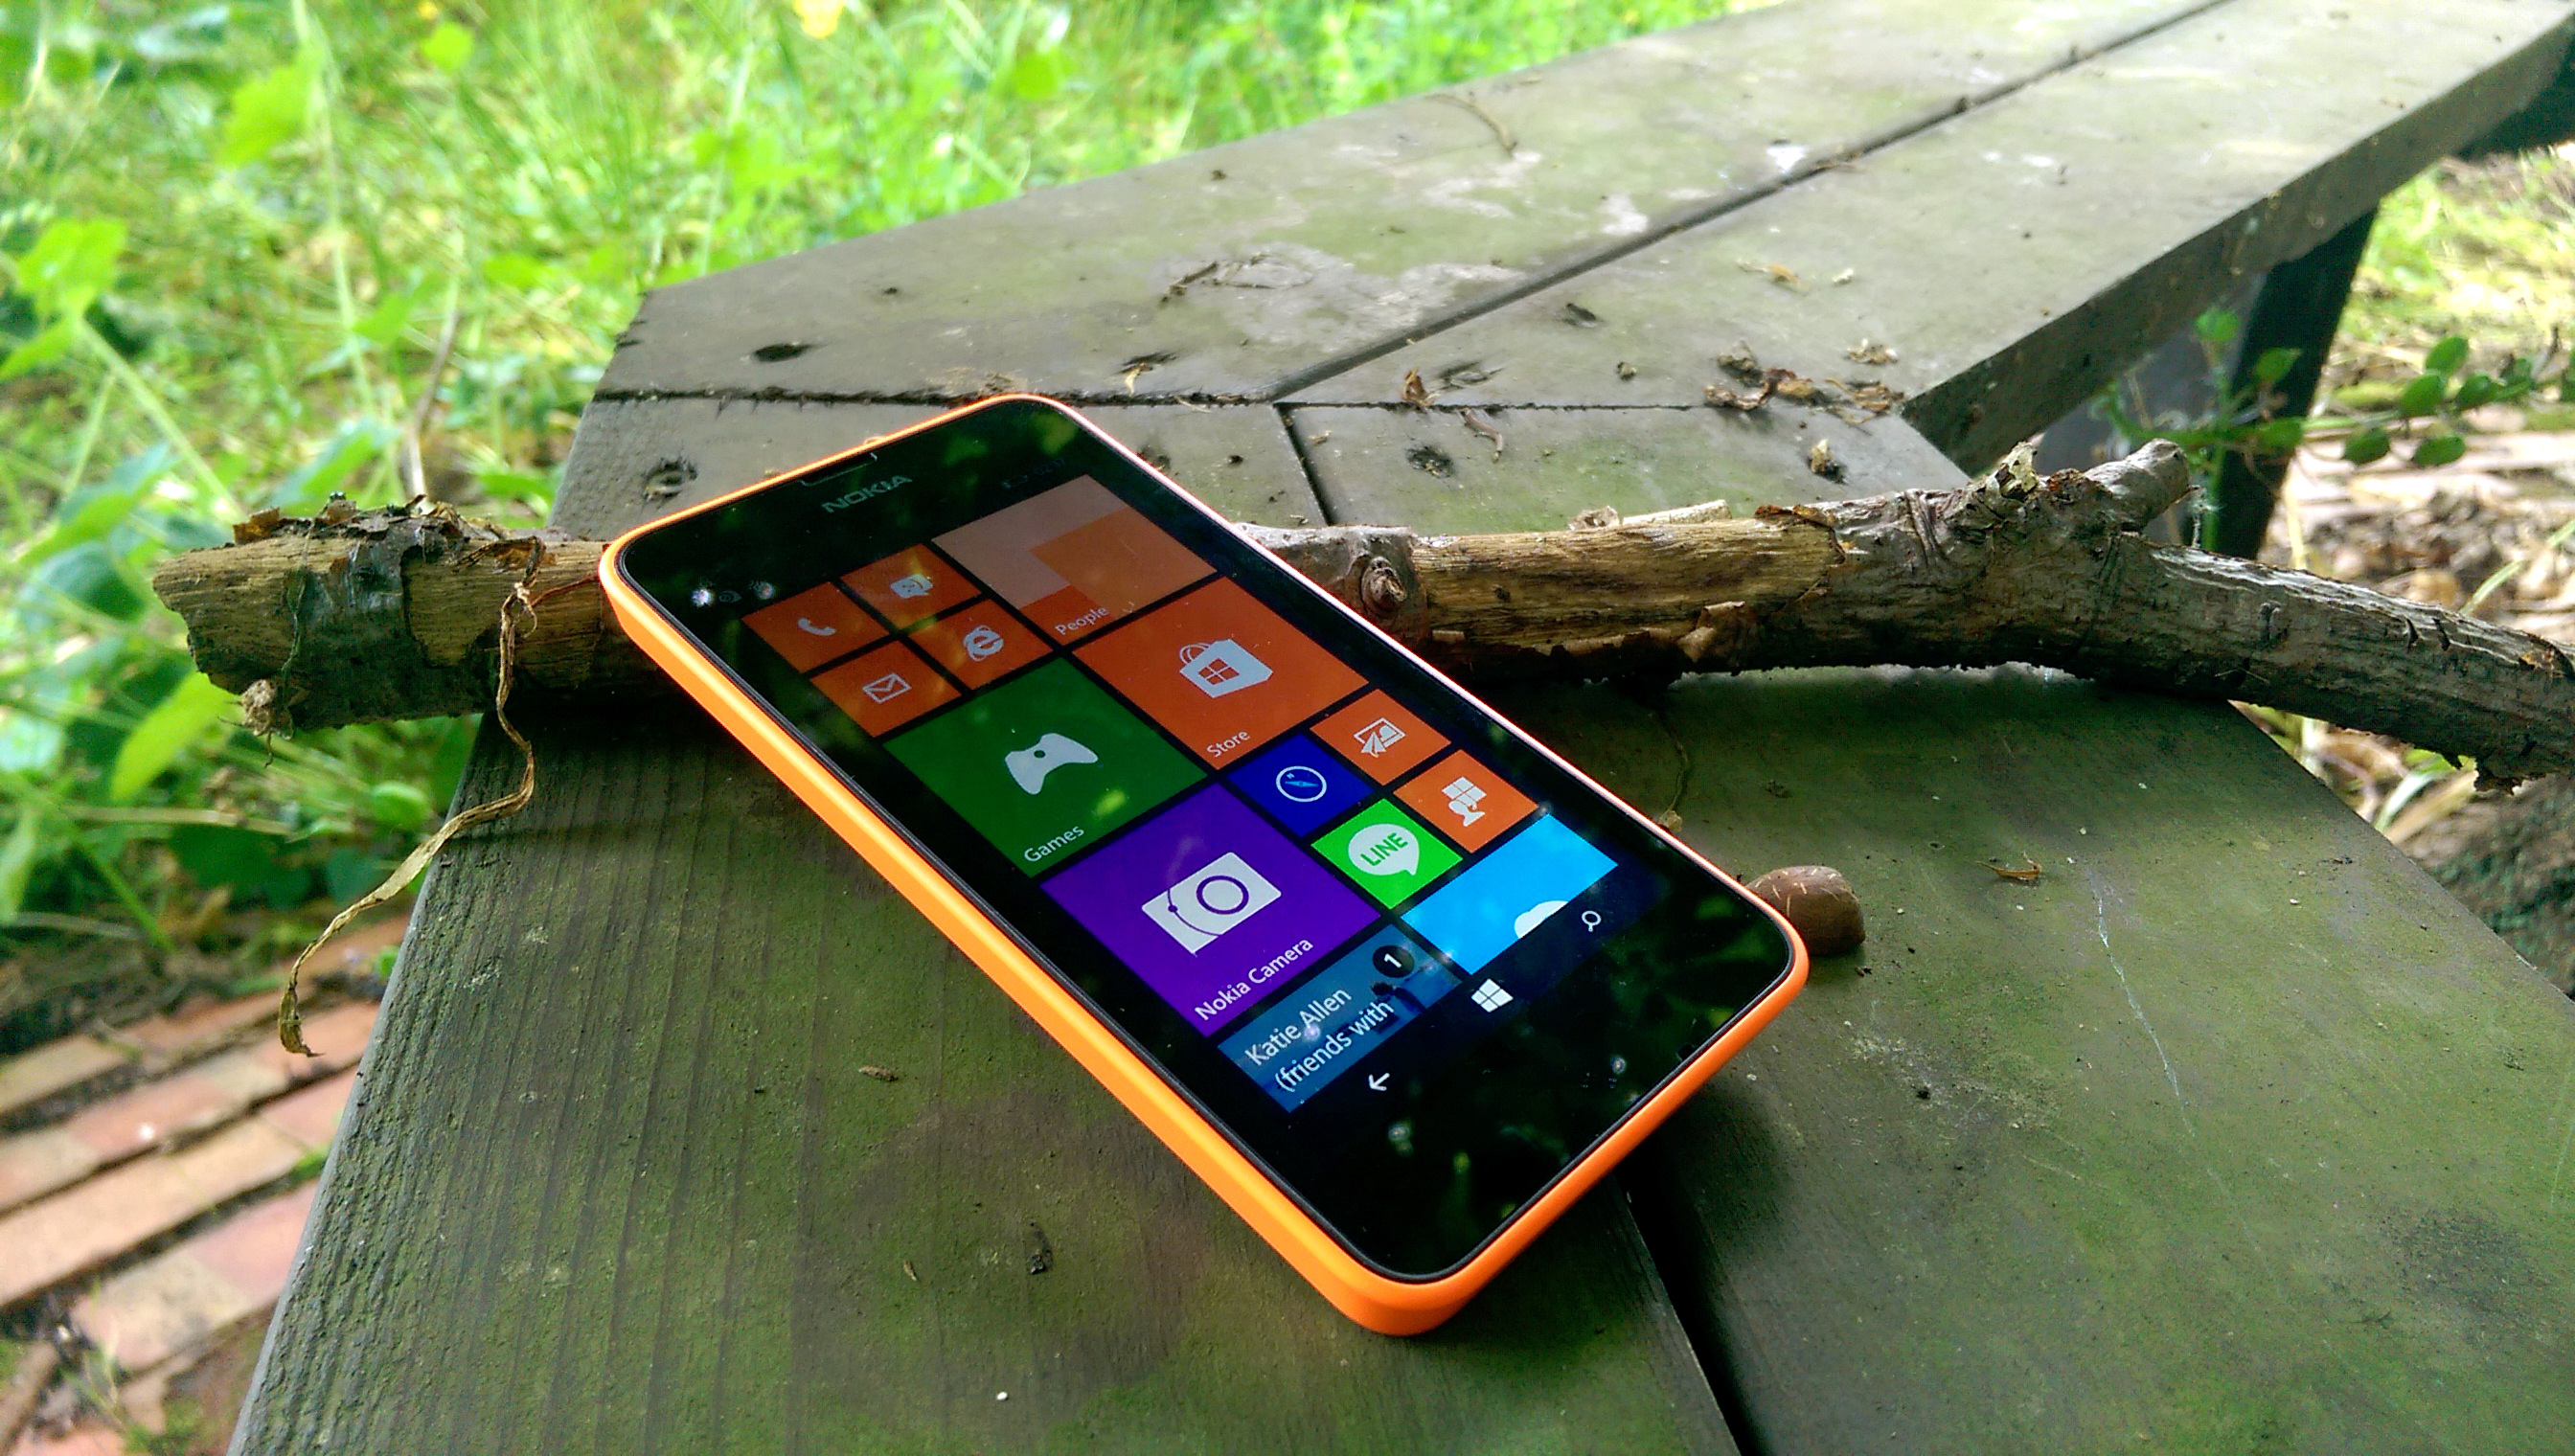 Nokia Lumia 630 8GB Smartphone Windows Mobile Phone White/Green